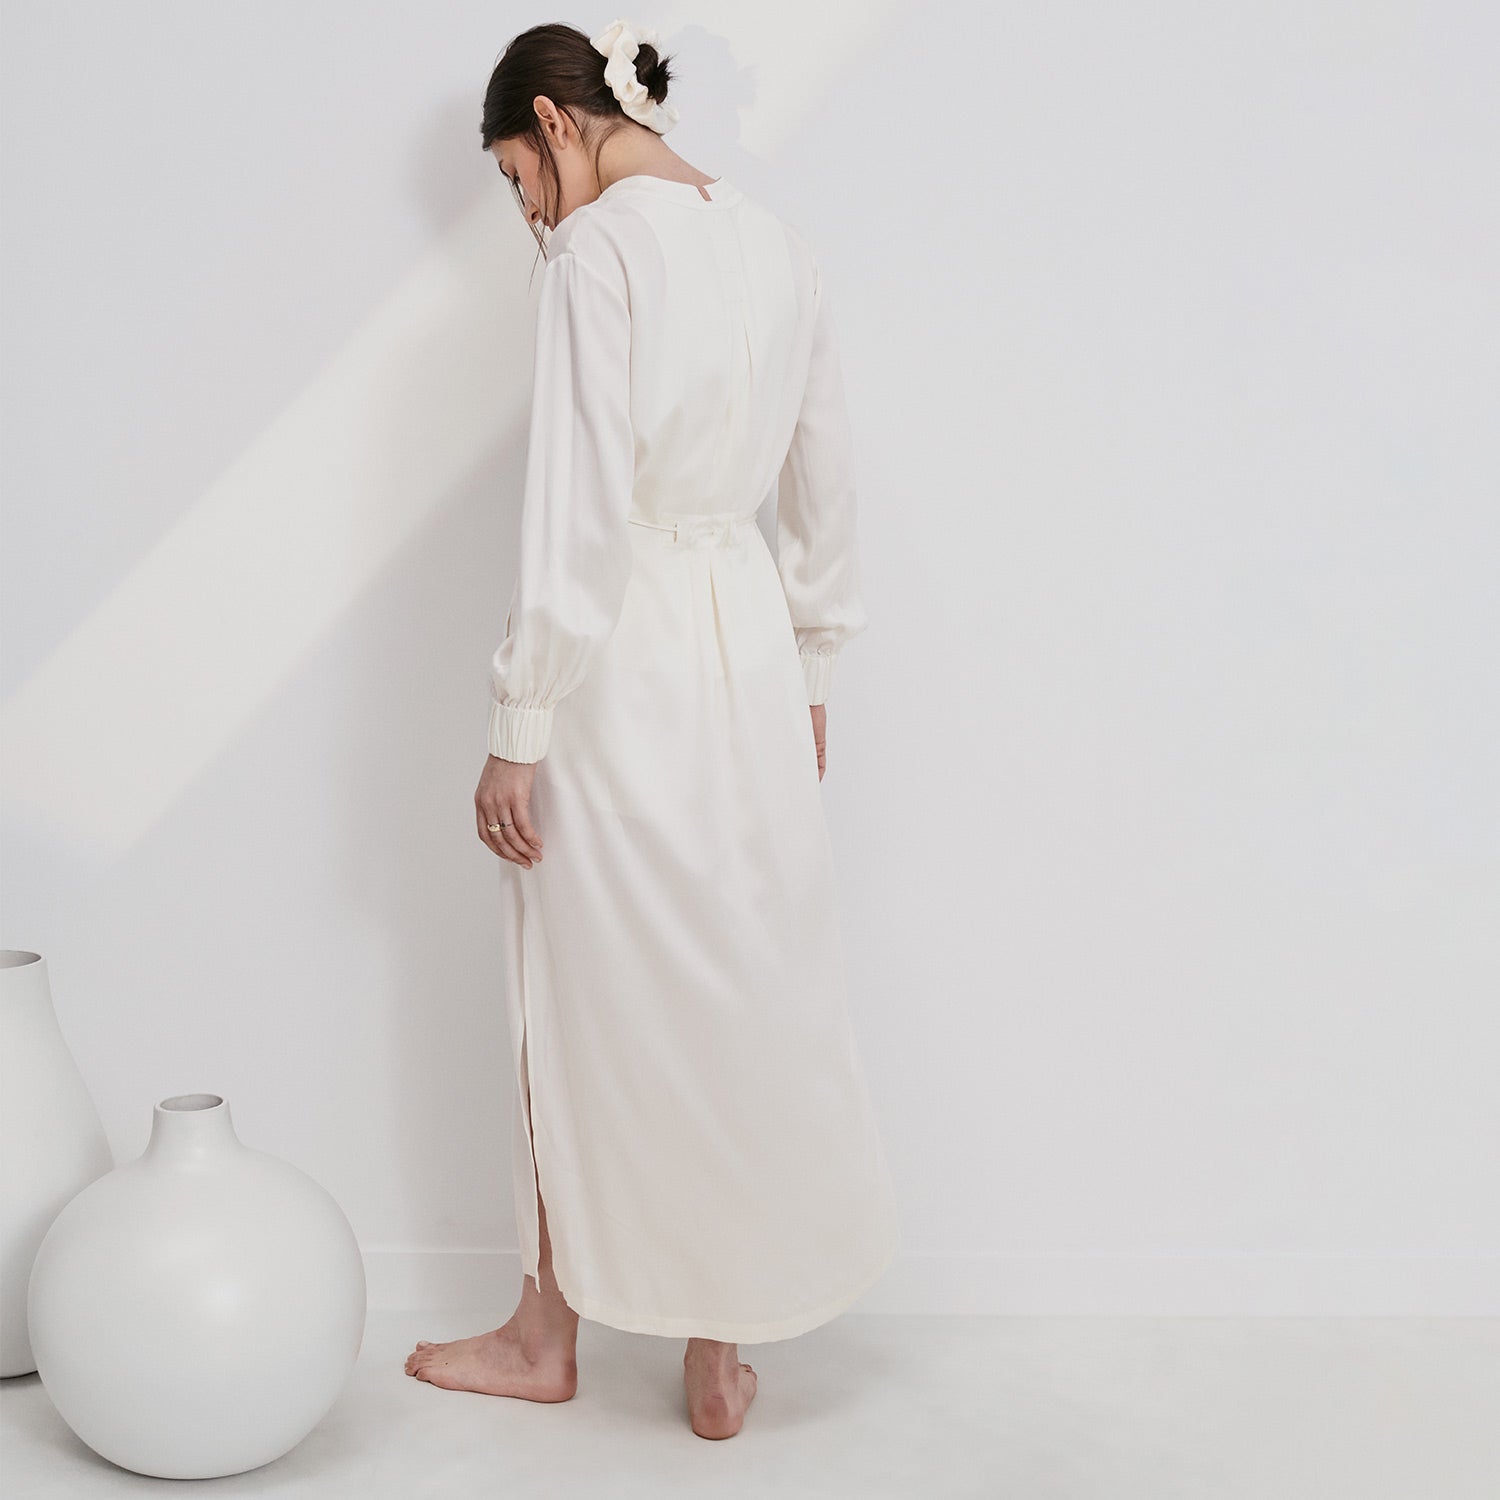 Skkinvalue's Luxurious Plain Satin long sleep with robe new color